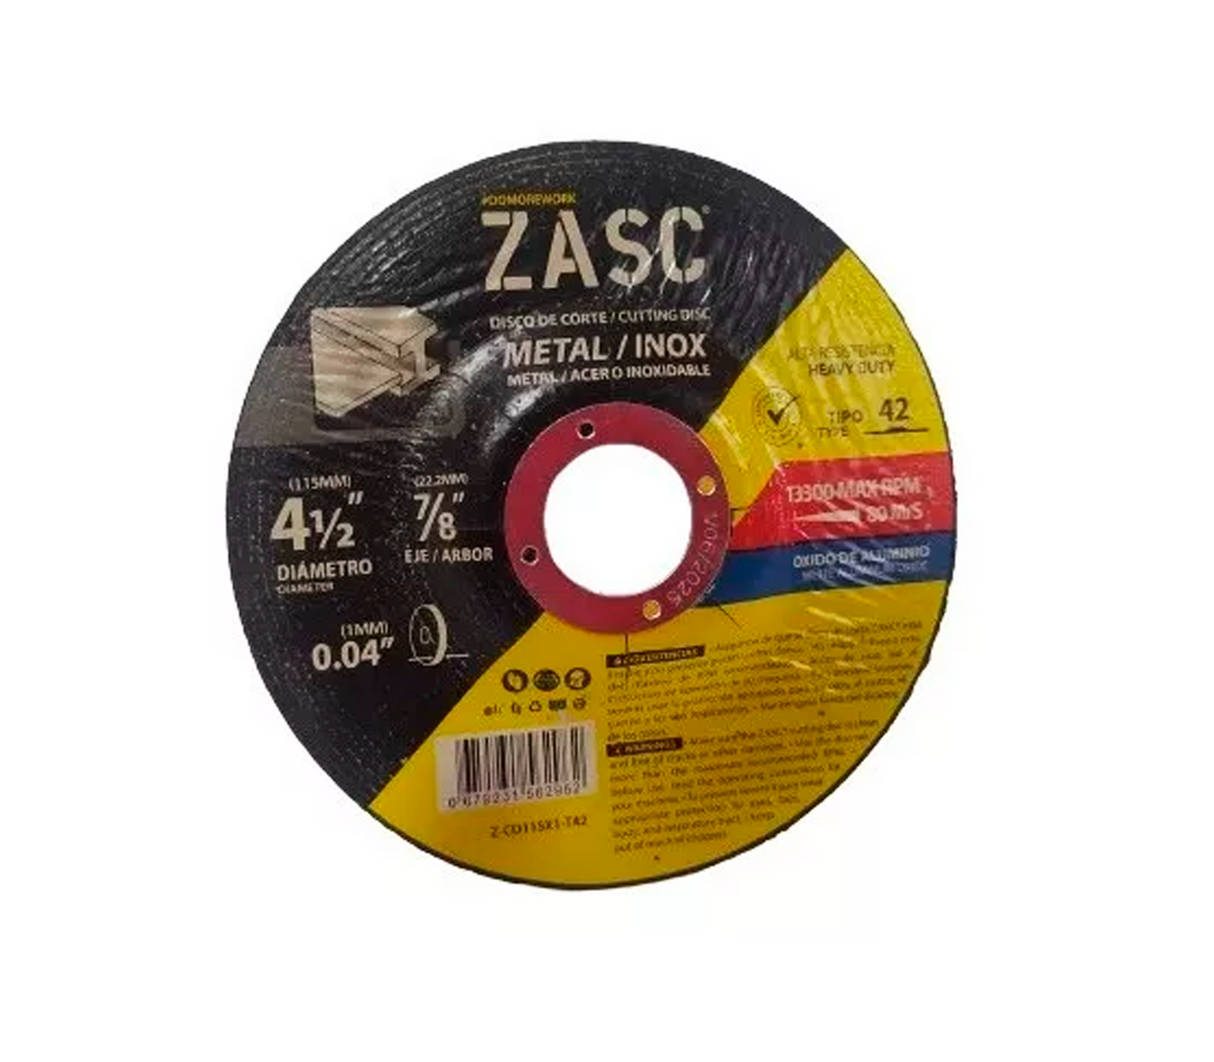 Disco corte metal 4 1/2" COD. 4-345-2 Zasc